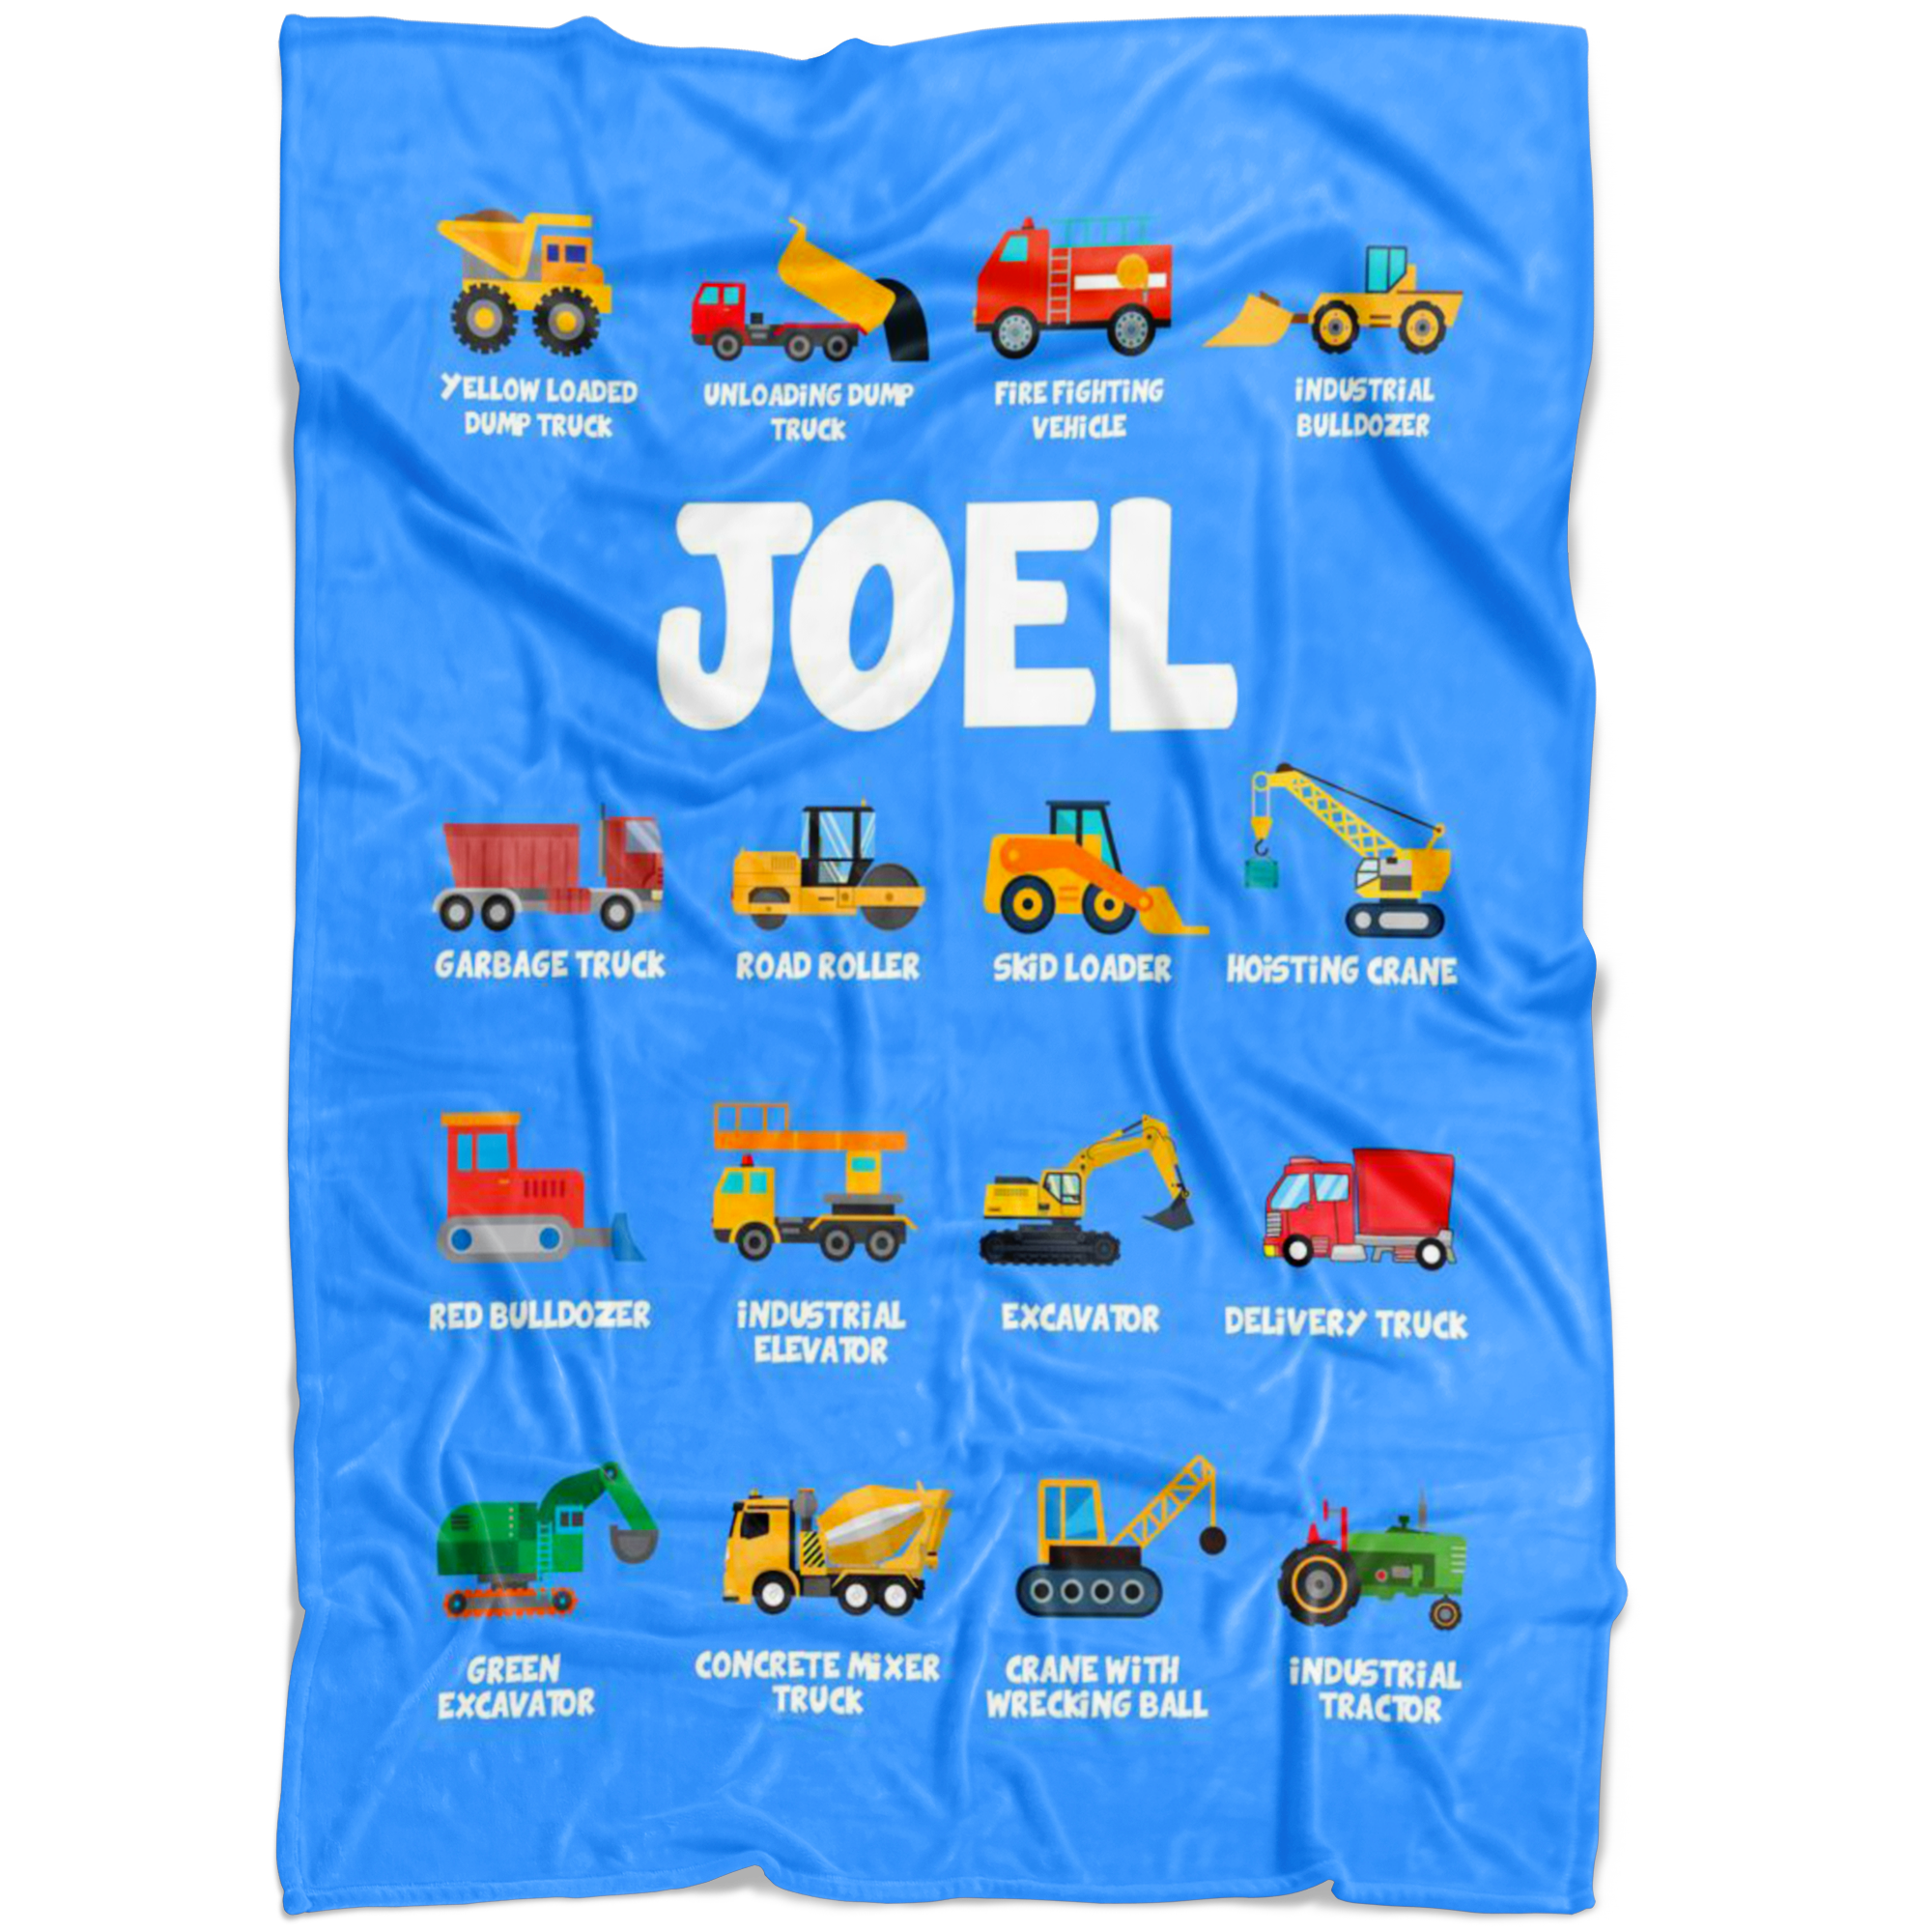 JOEL Construction Blanket Blue